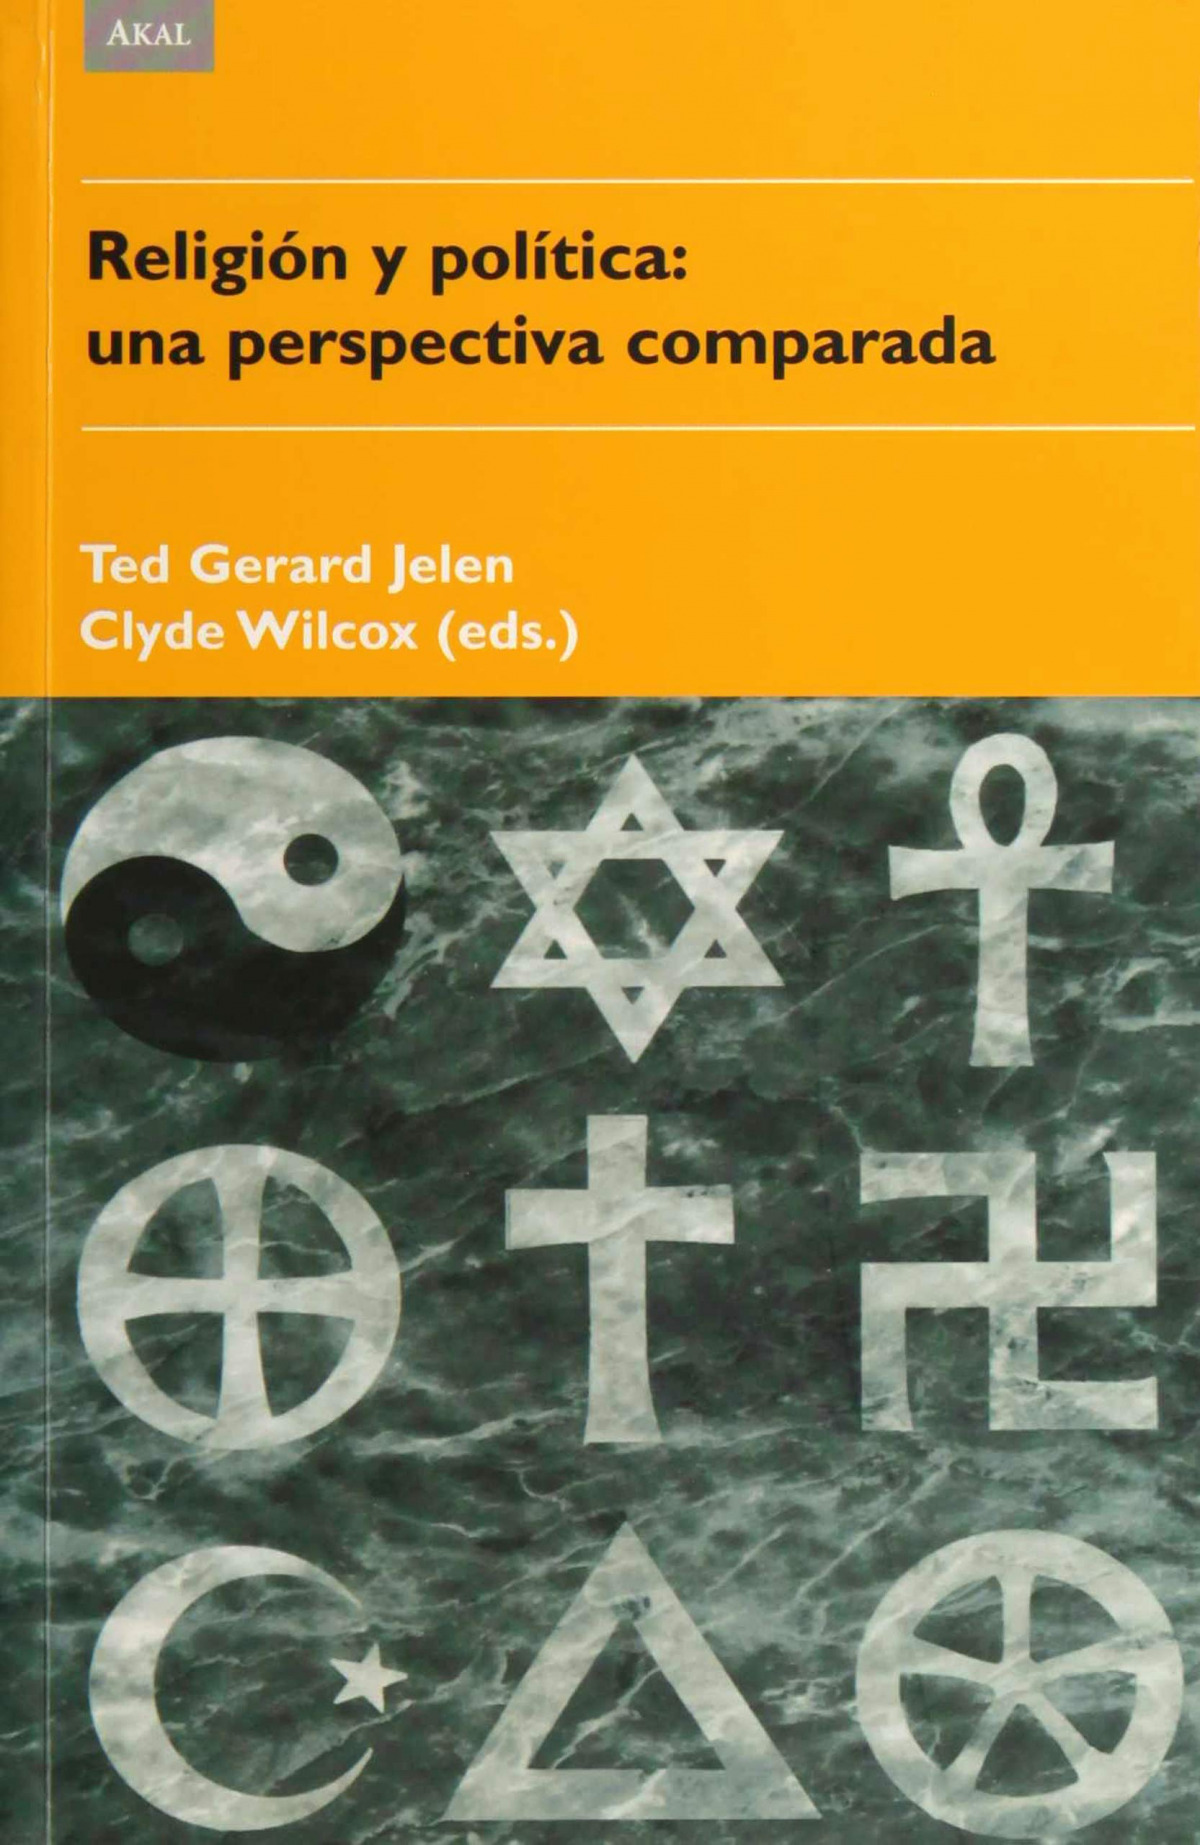 Religión y política - Jelen, Ted Gerald - Wilcox, Clyde